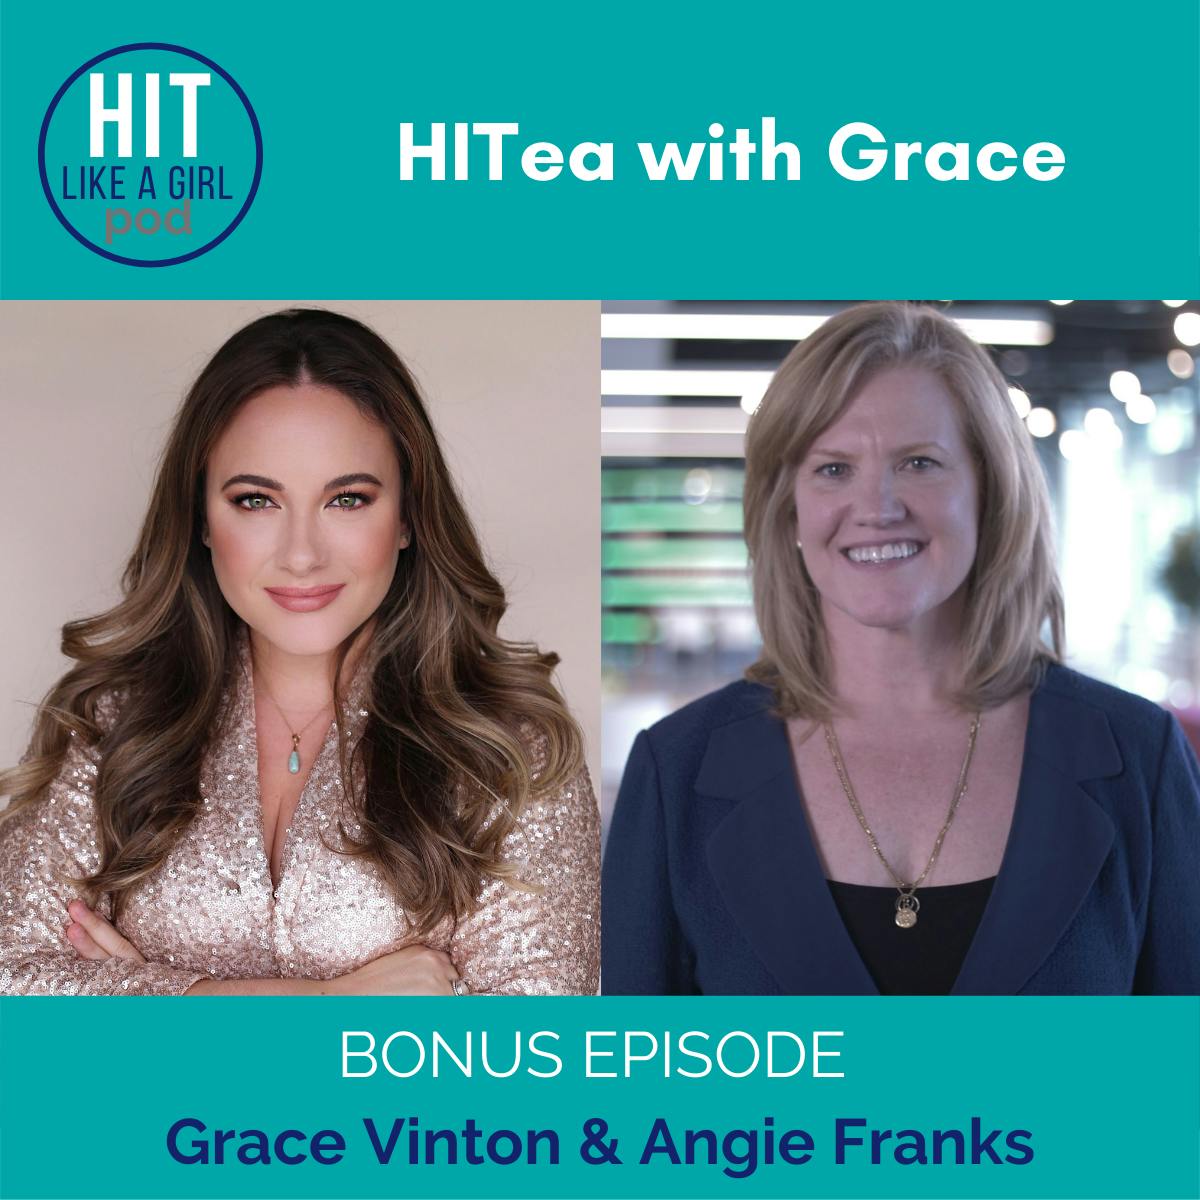 HITea with Grace: Grace Vinton & Angie Franks discuss optimizing access to care